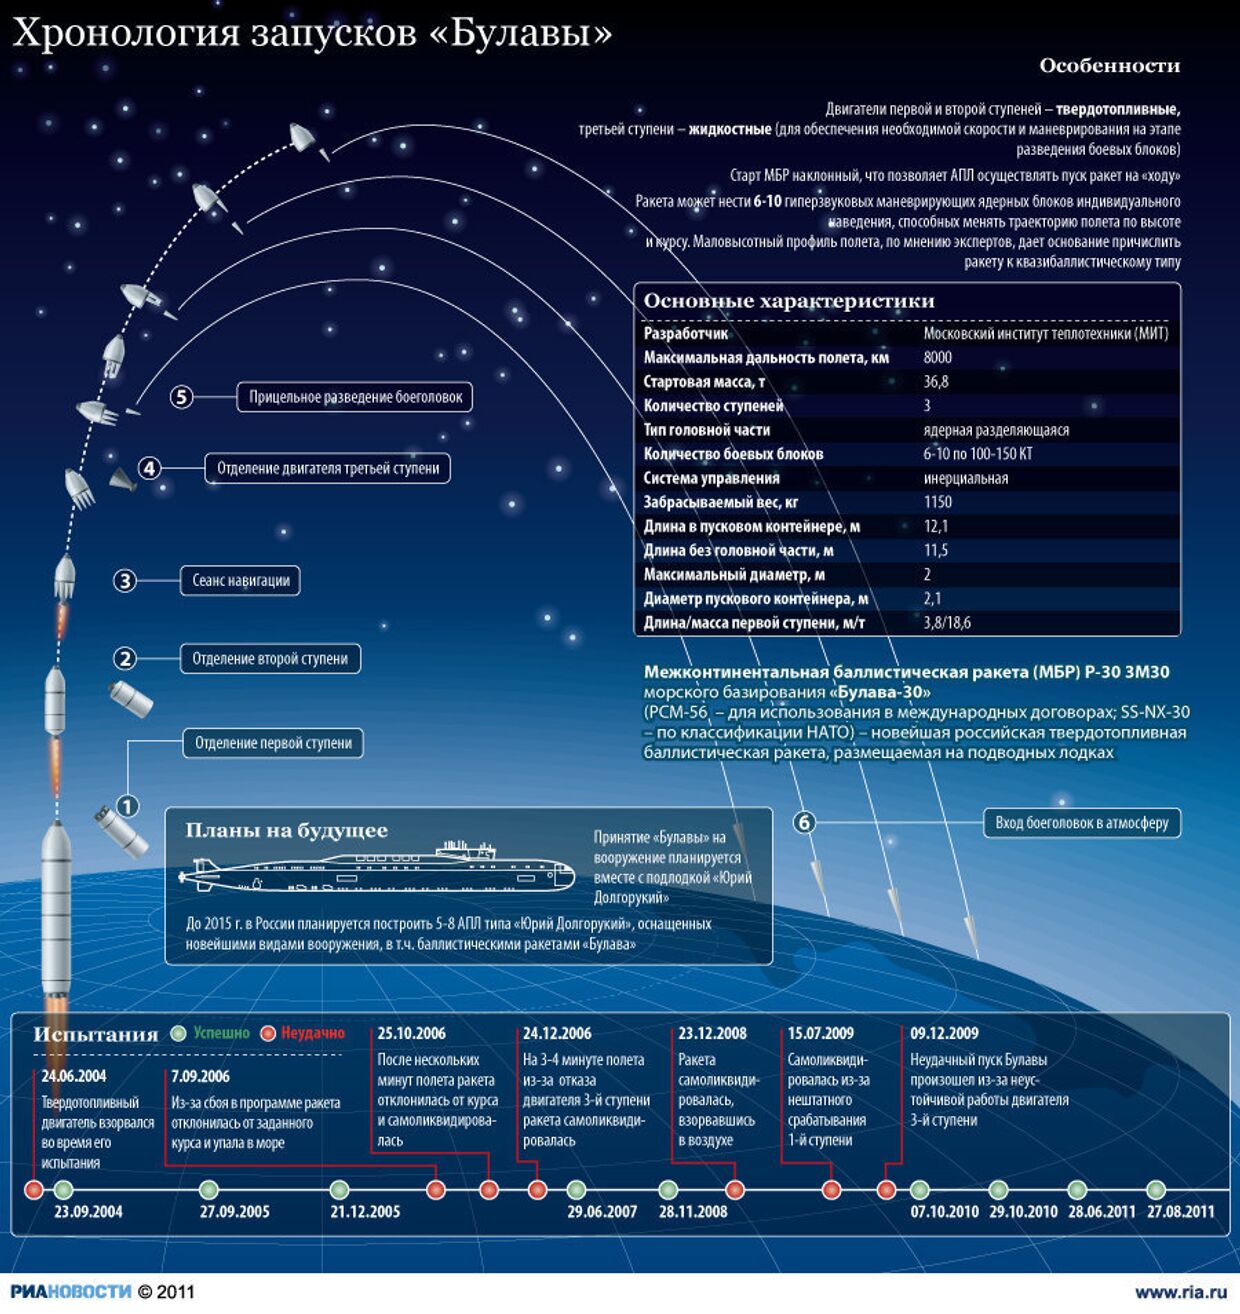 Хронология запусков ракеты Булава